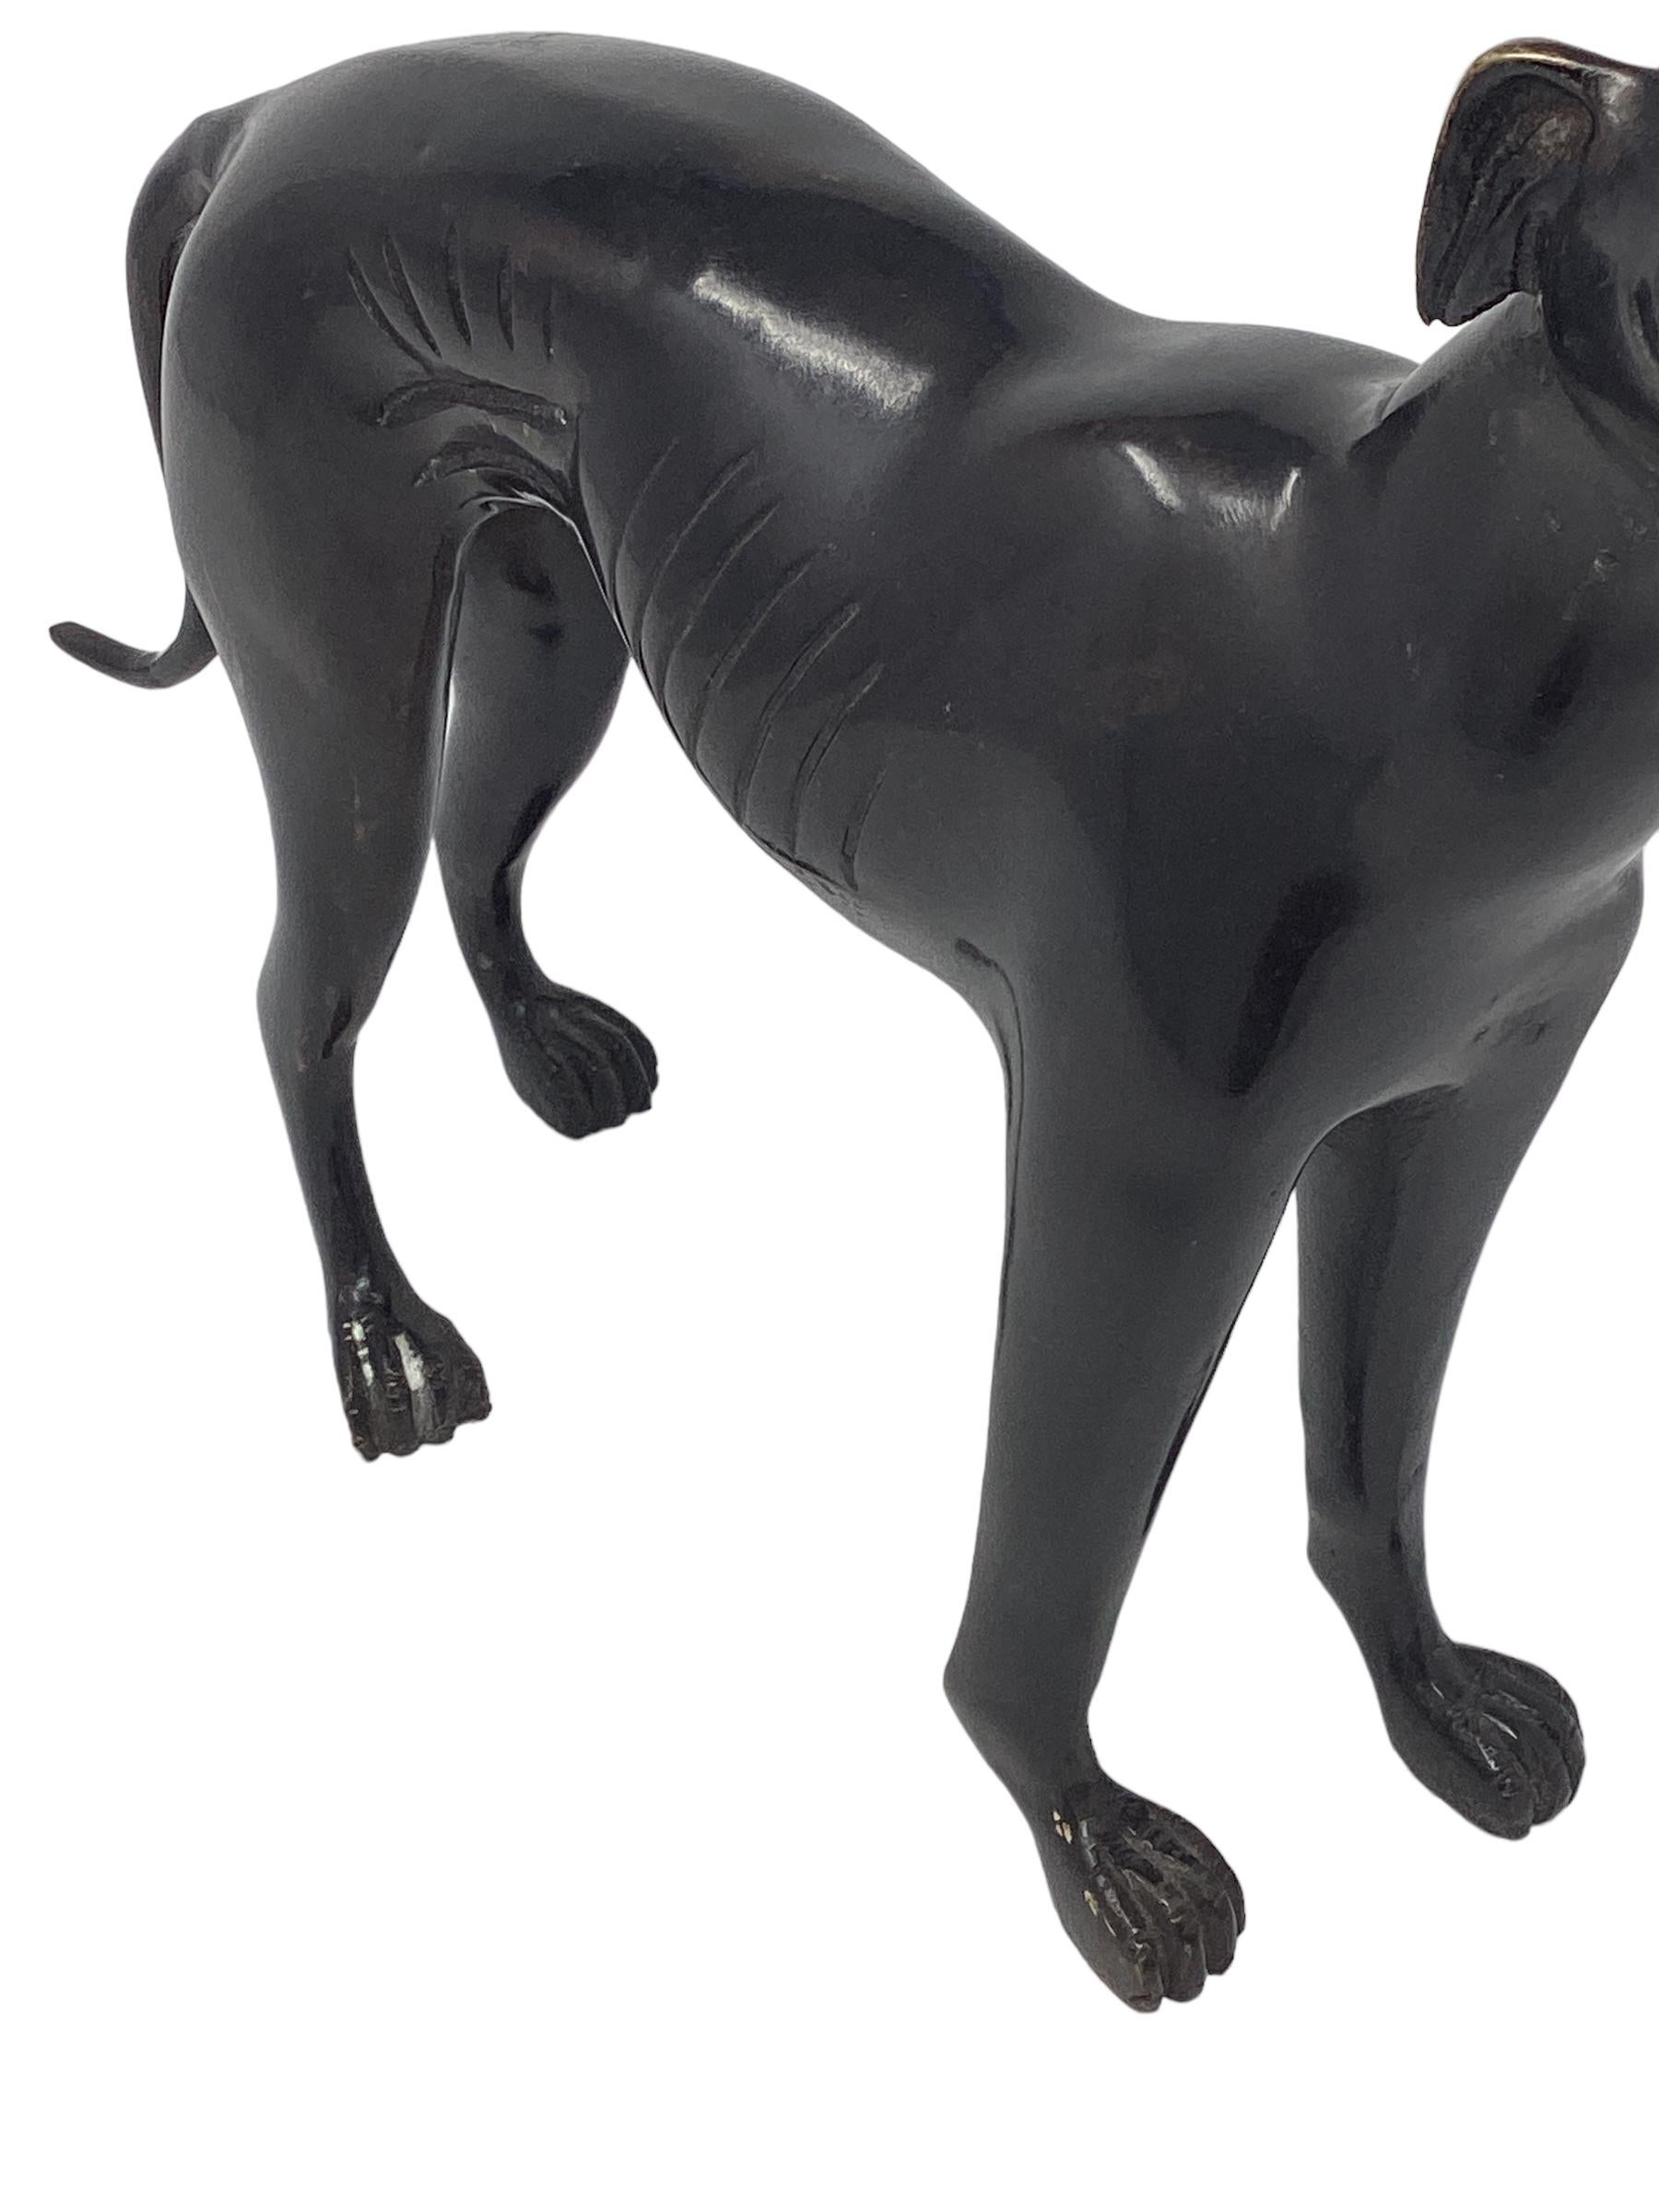 Vintage Bronze Greyhound or Whippet
